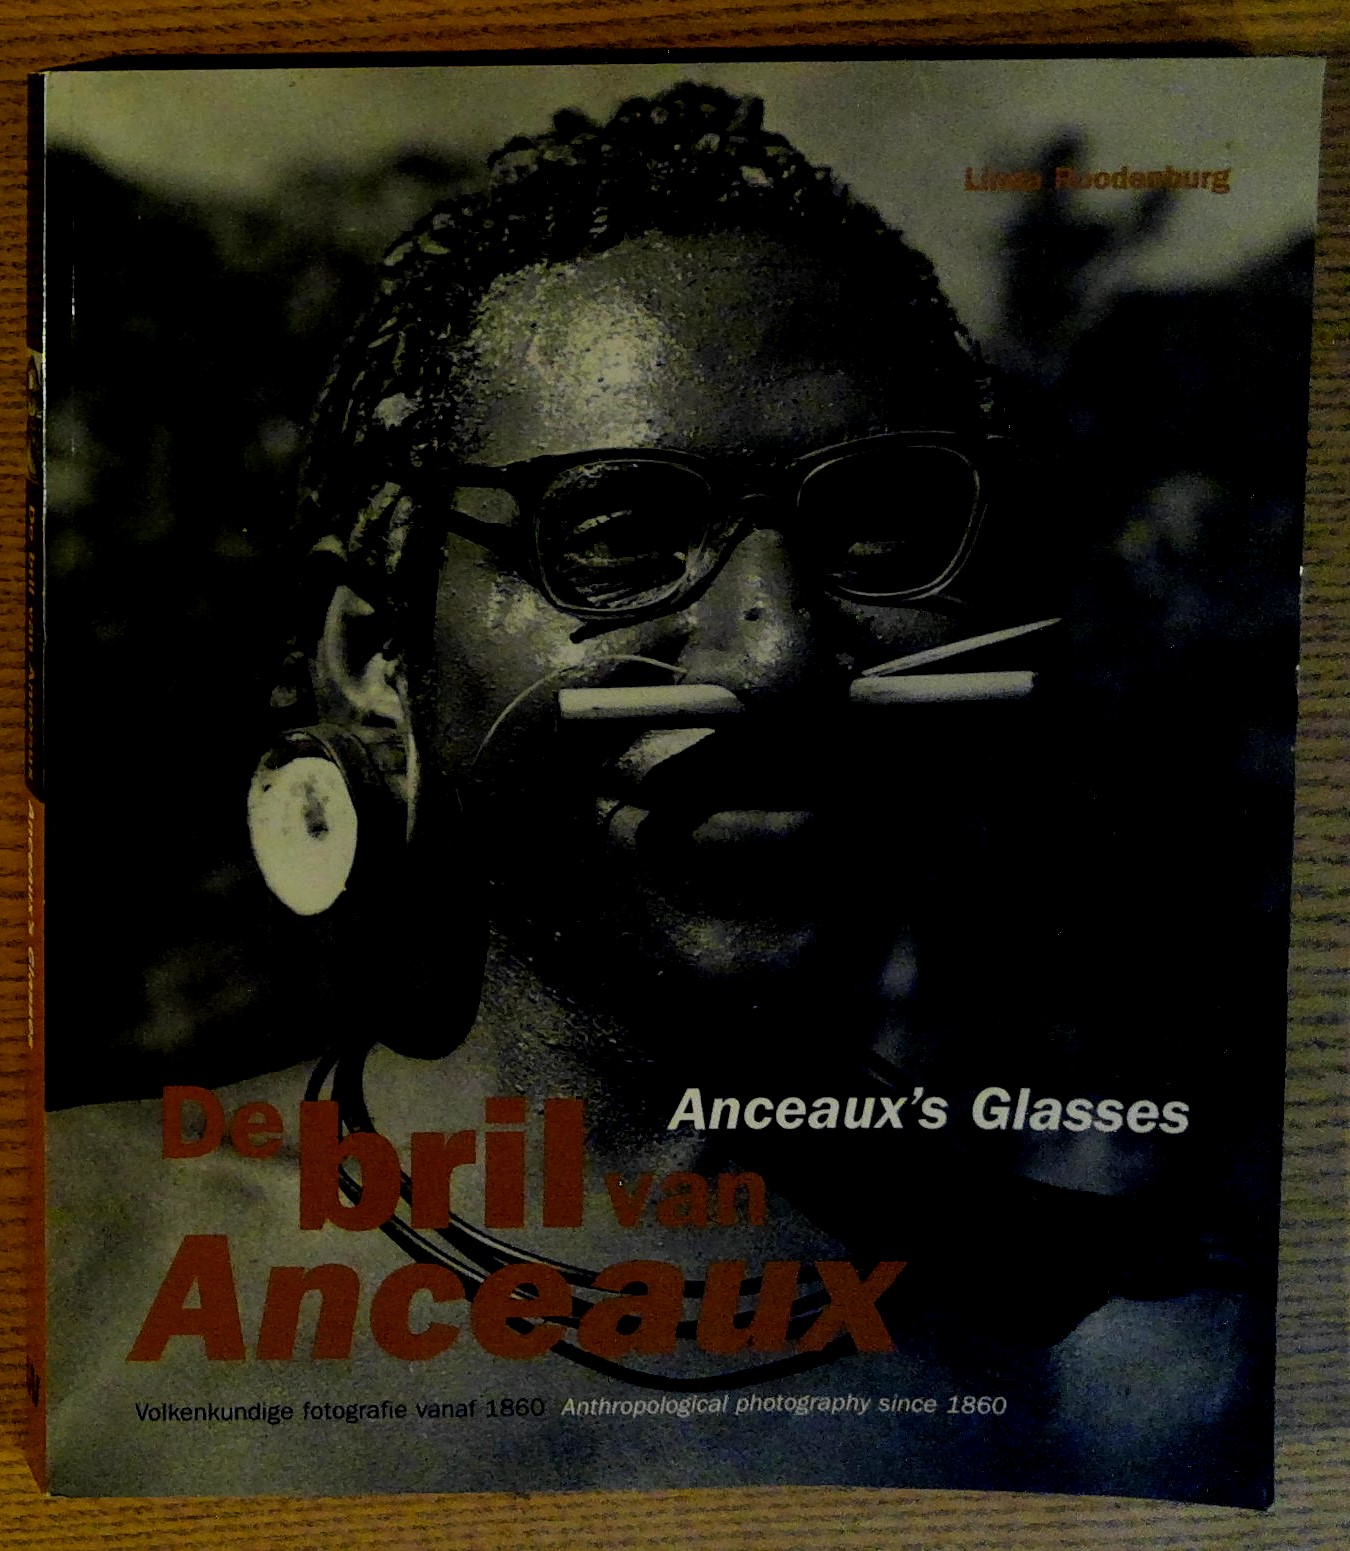 Image for De Bril Van Anceaux/Anceaux's Glasses: Volkenkundige Fotografie Vanaf 1860/Anthropological Photography Since 1860